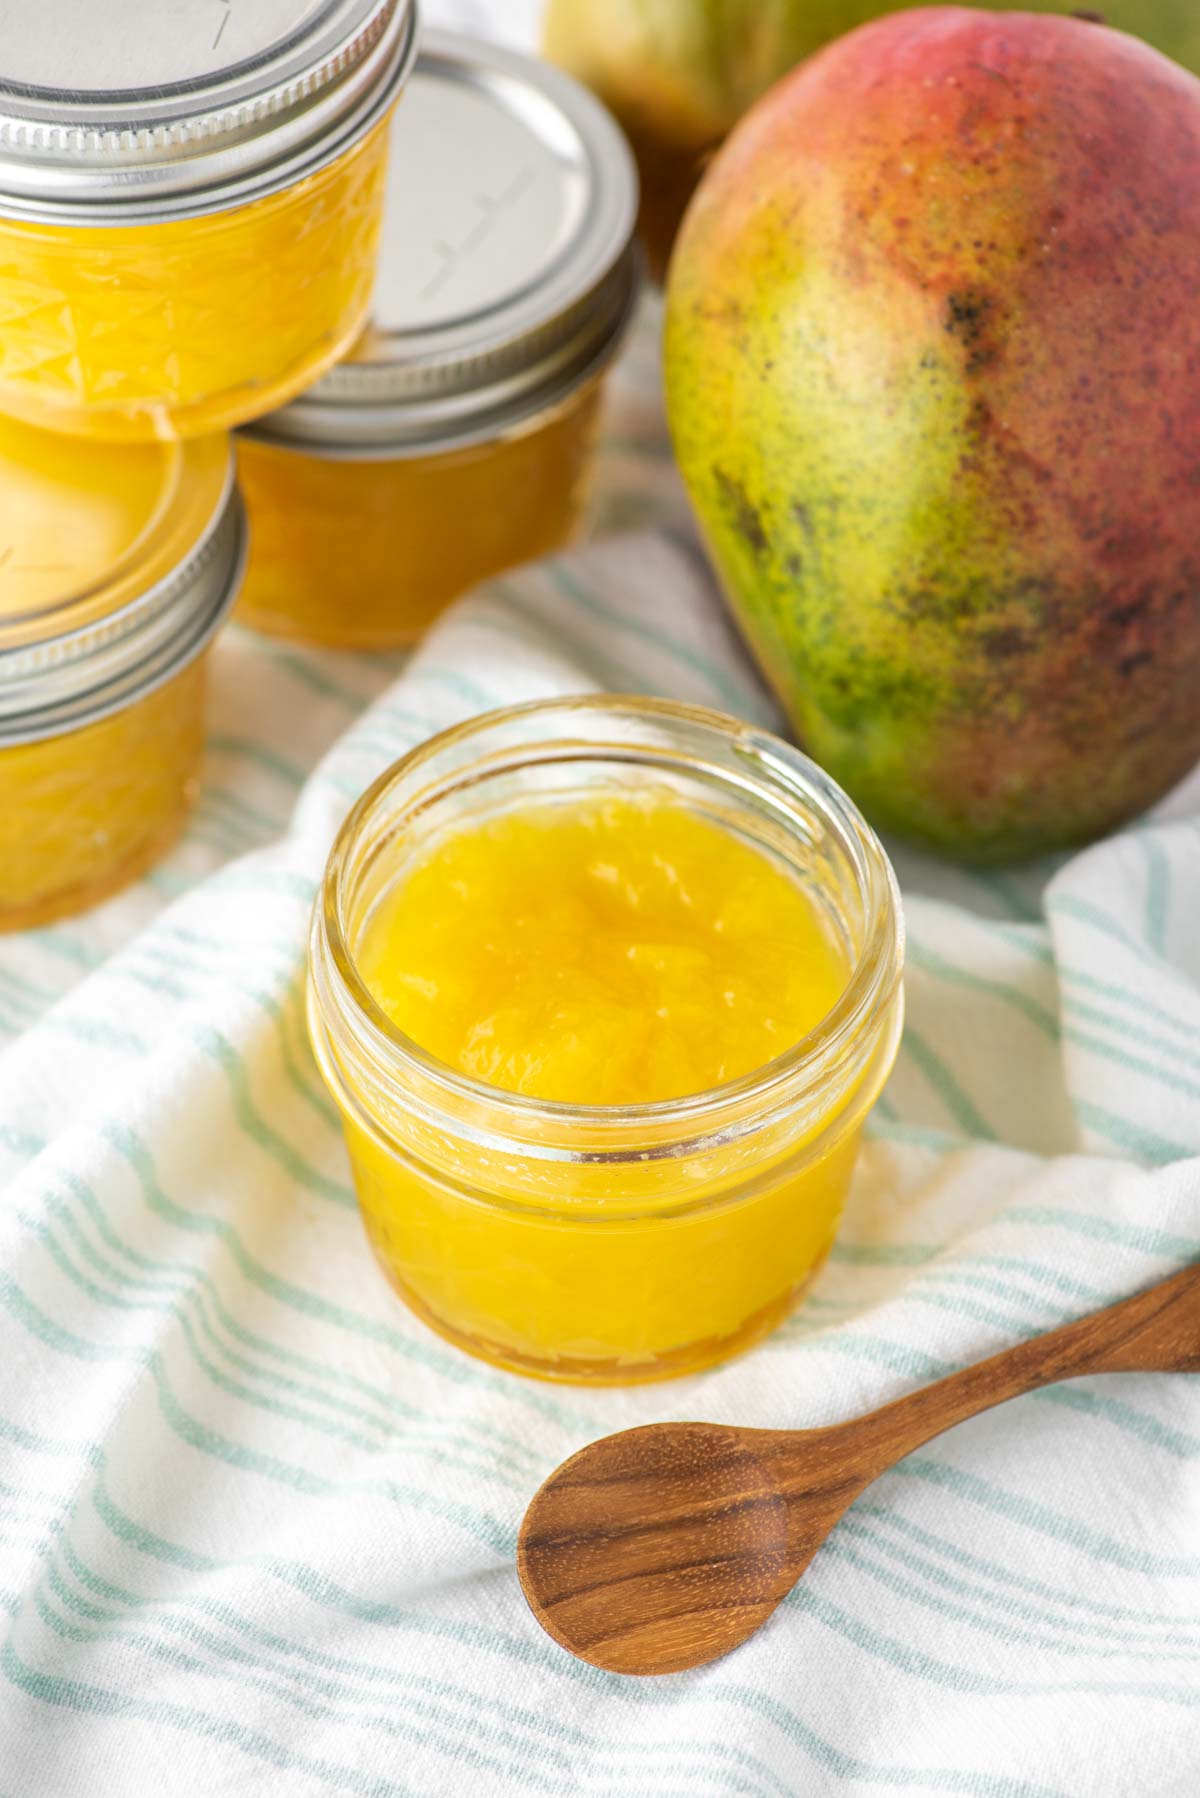 jam in glass jar with fresh mango in background